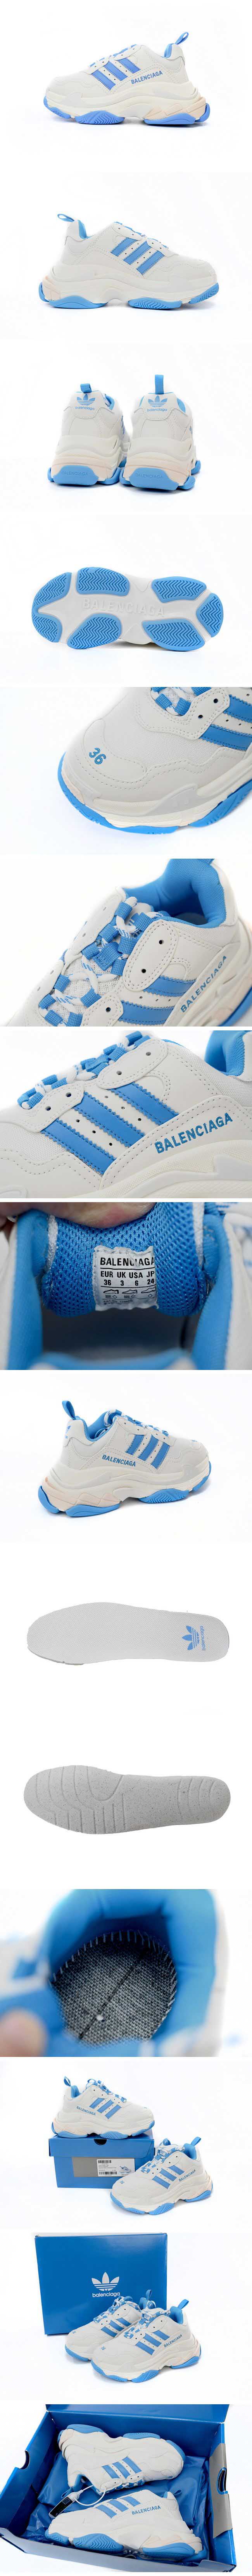 Adidas x Balenciaga Triple S White/Blue アディダス x バレンシアガ トリプルエス ホワイト/ブルー